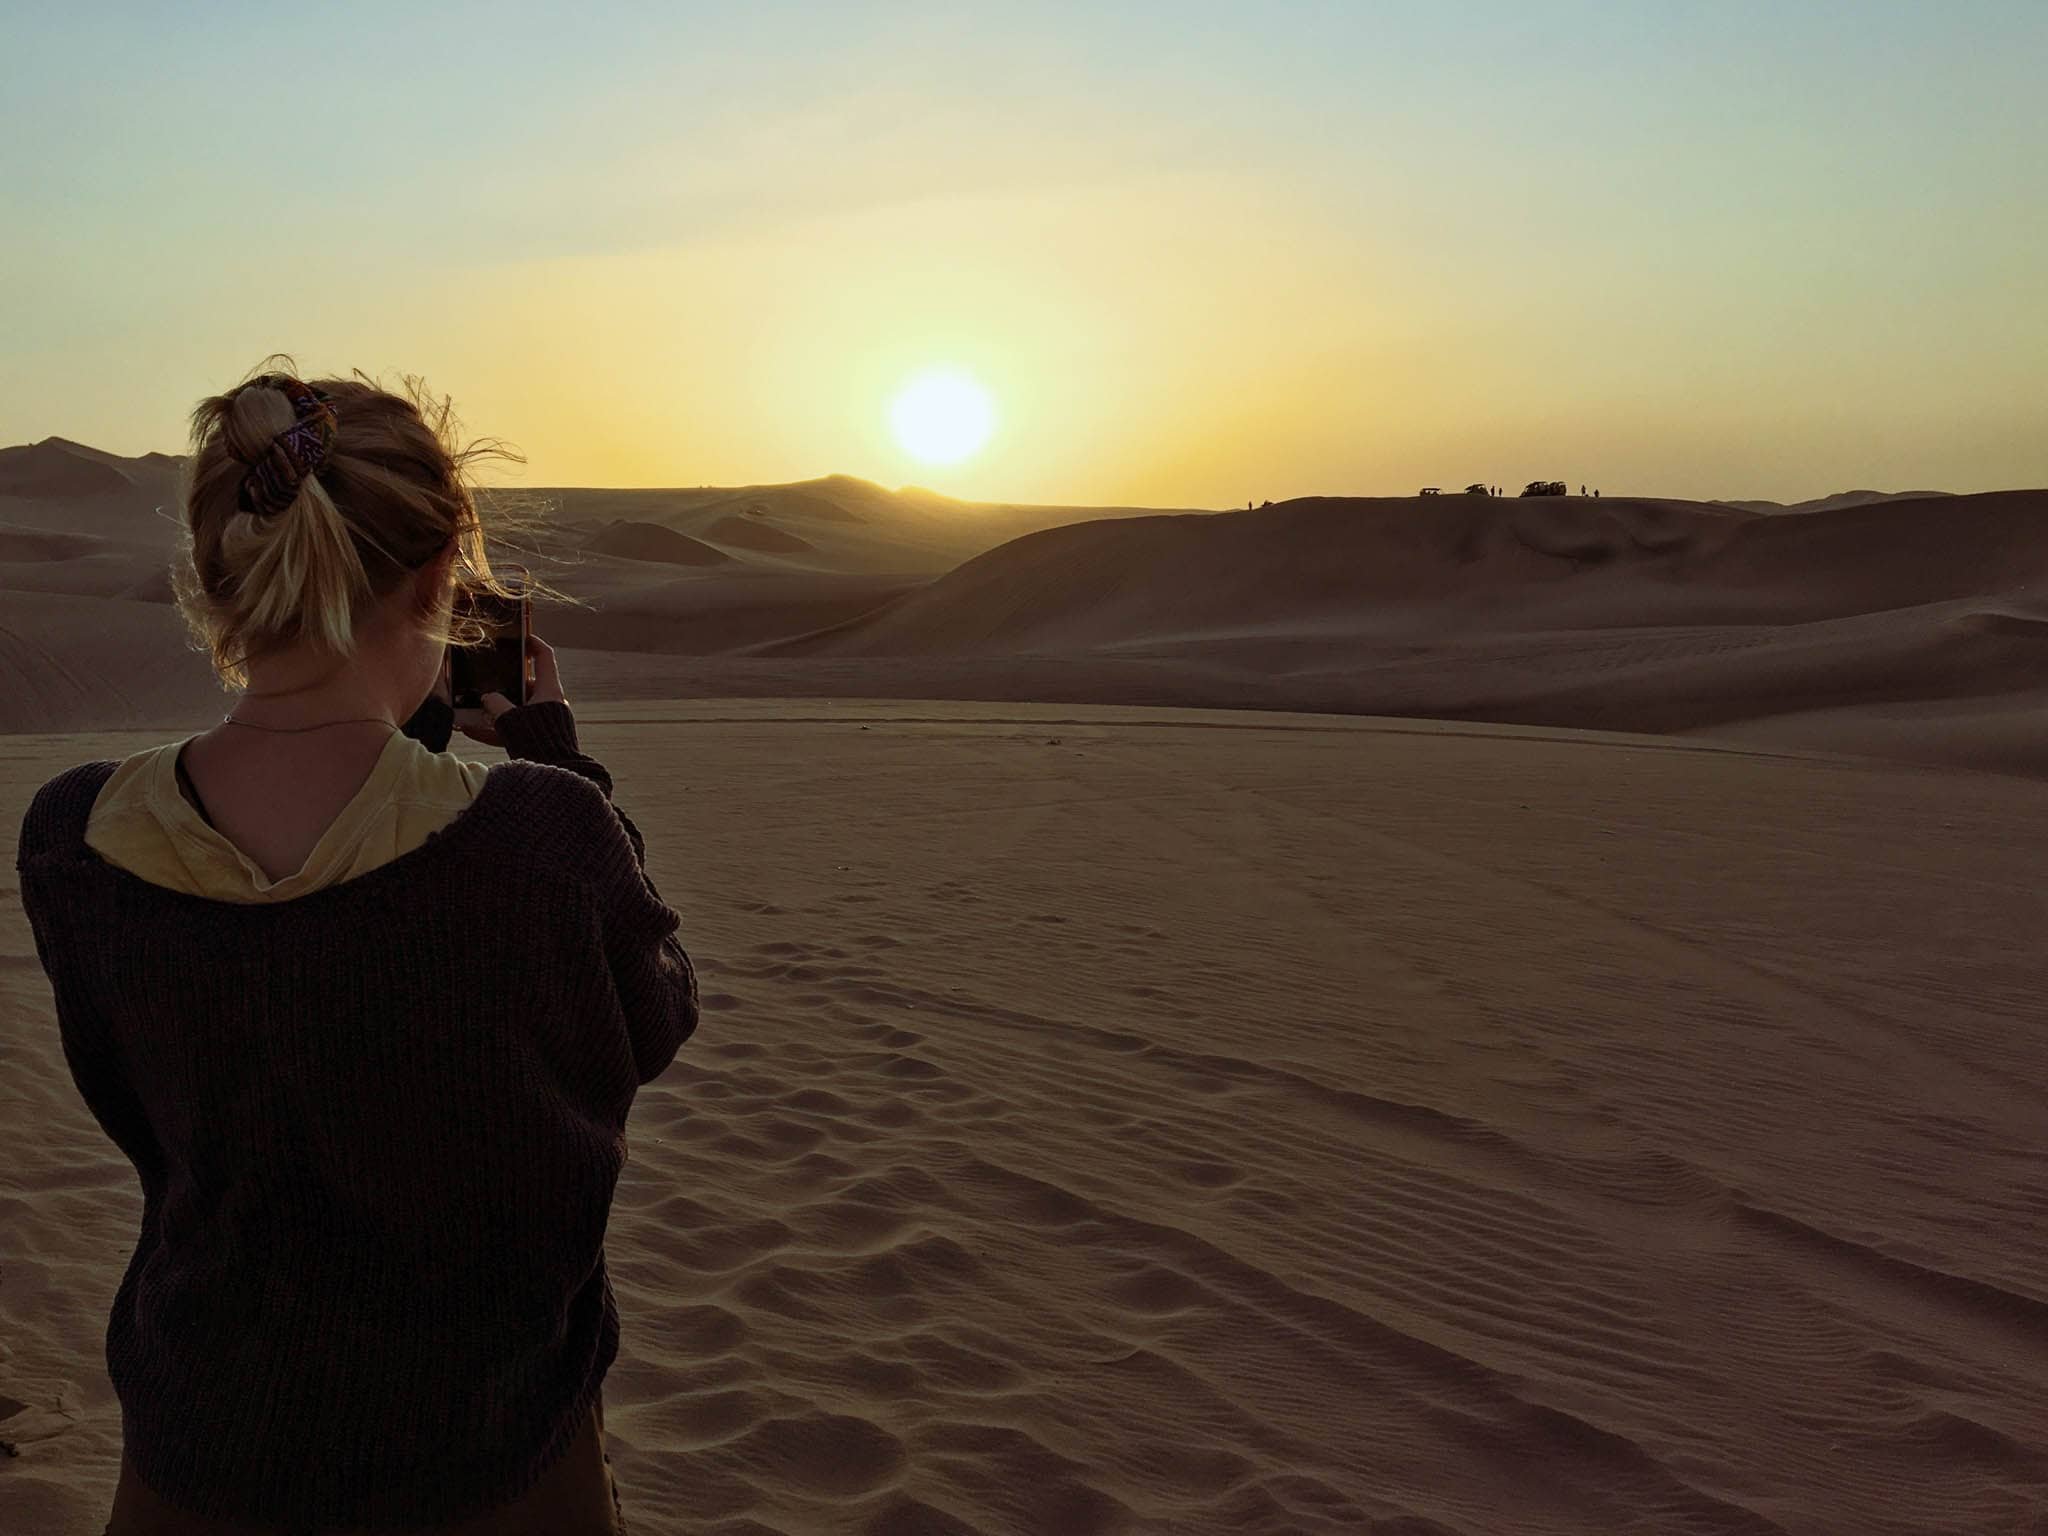 Sun setting over the sand dunes in Huacachina - Peru